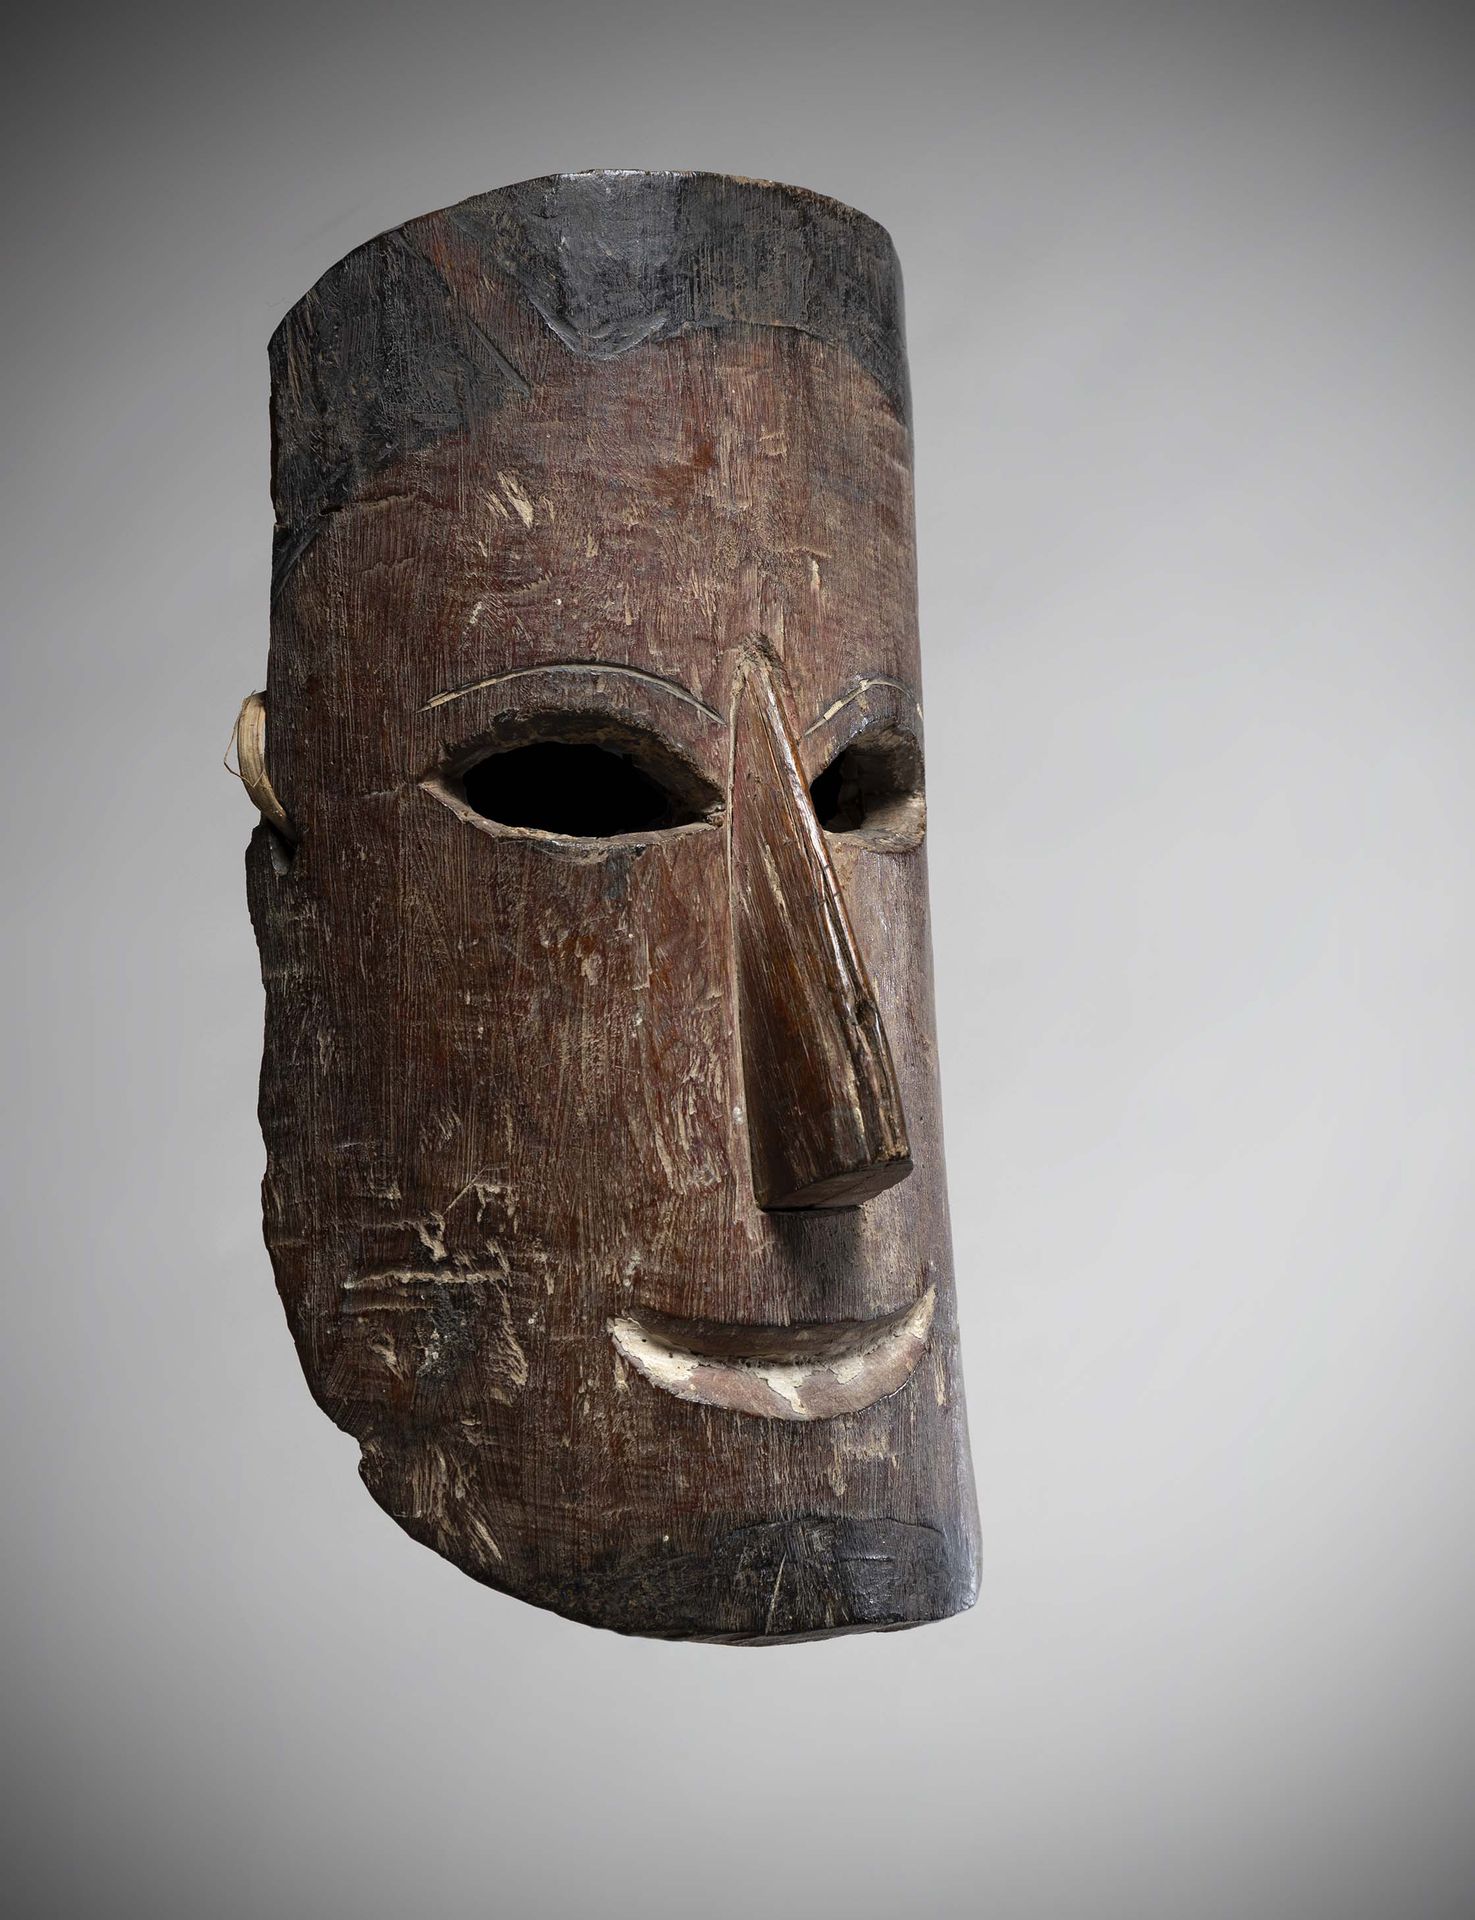 Null Fang/

Okak

Äquatorialguinea Maske aus Hartholz mit heller Patina.

Die Au&hellip;